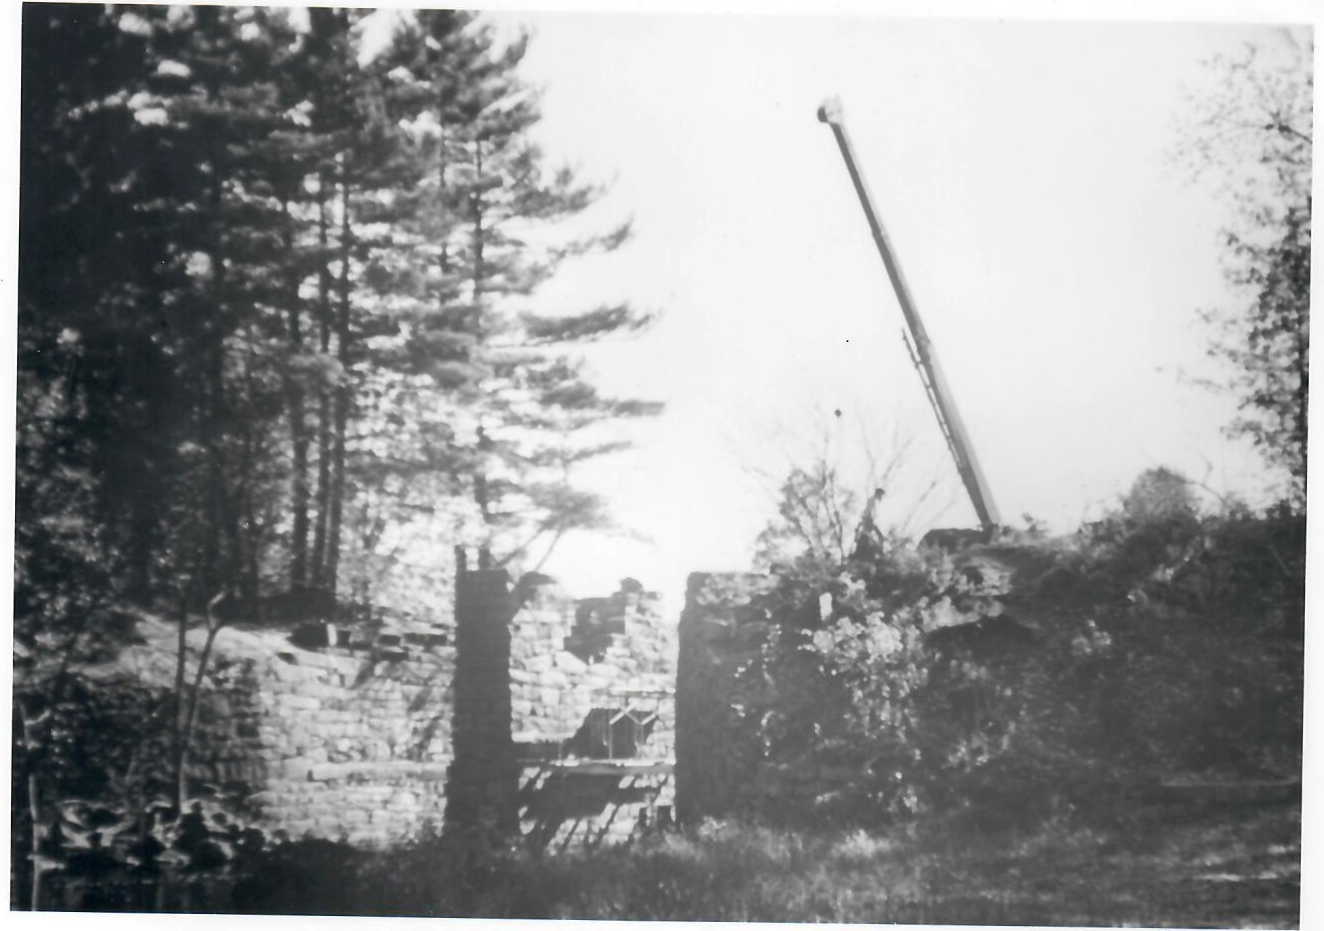 Restoration of the Shawsheen Aqueduct